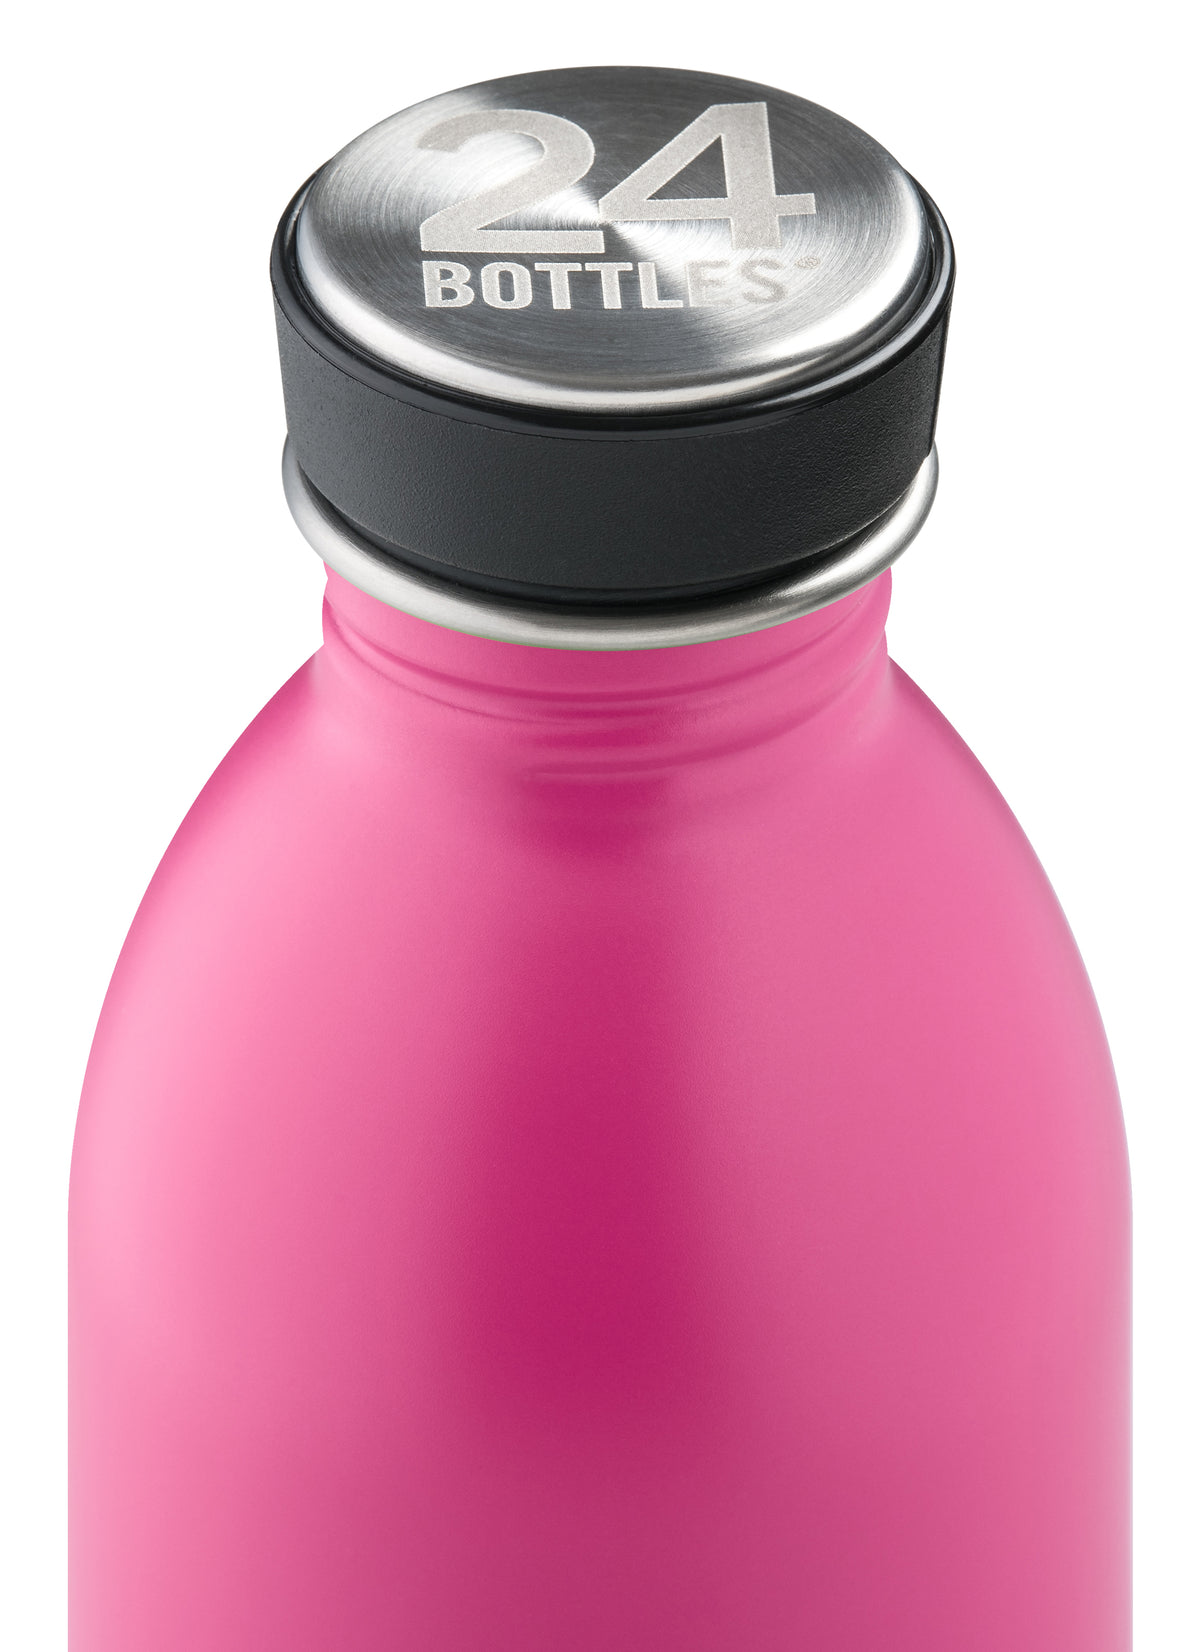 24BOTTLES Urban Lightest Stainless Steel Water Bottle - 500ml - Passion Pink